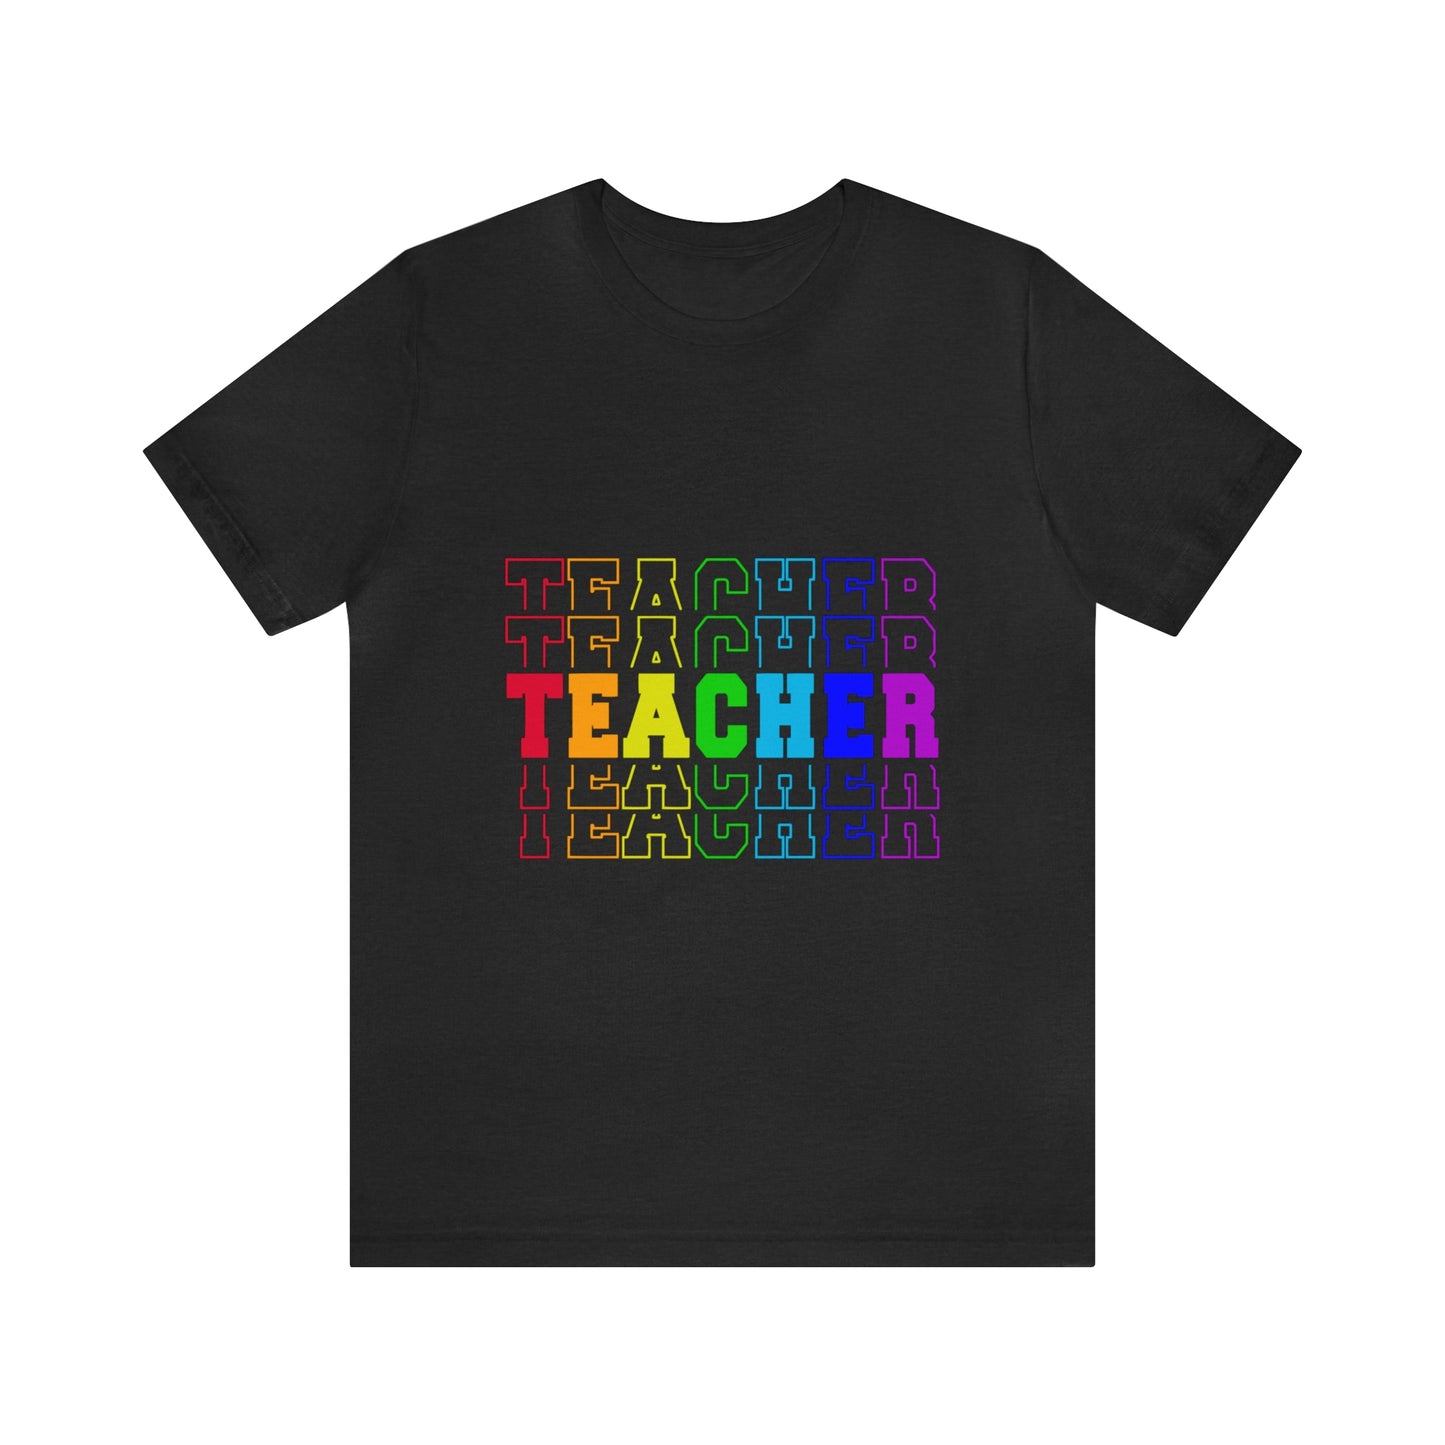 Colorful and fun "Teacher" Unisex Jersey Short Sleeve Tee